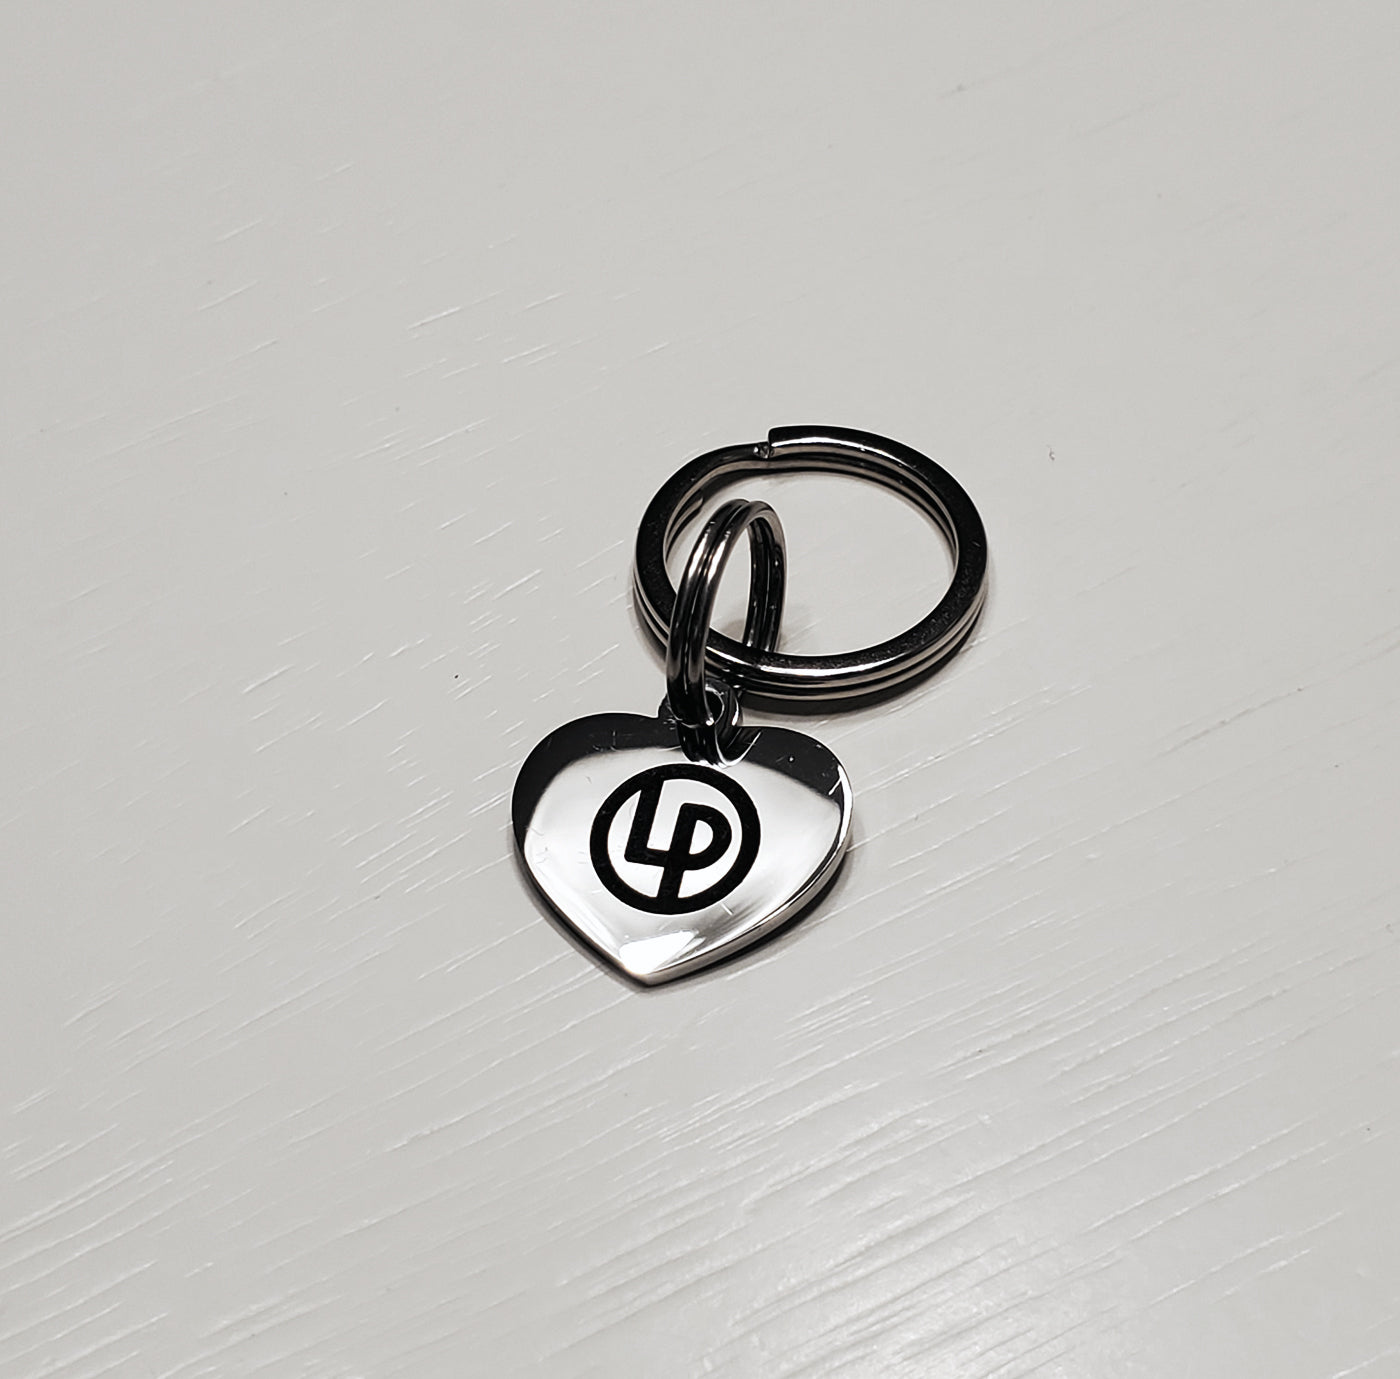 LP Stainless Steel Logo Micro Charm